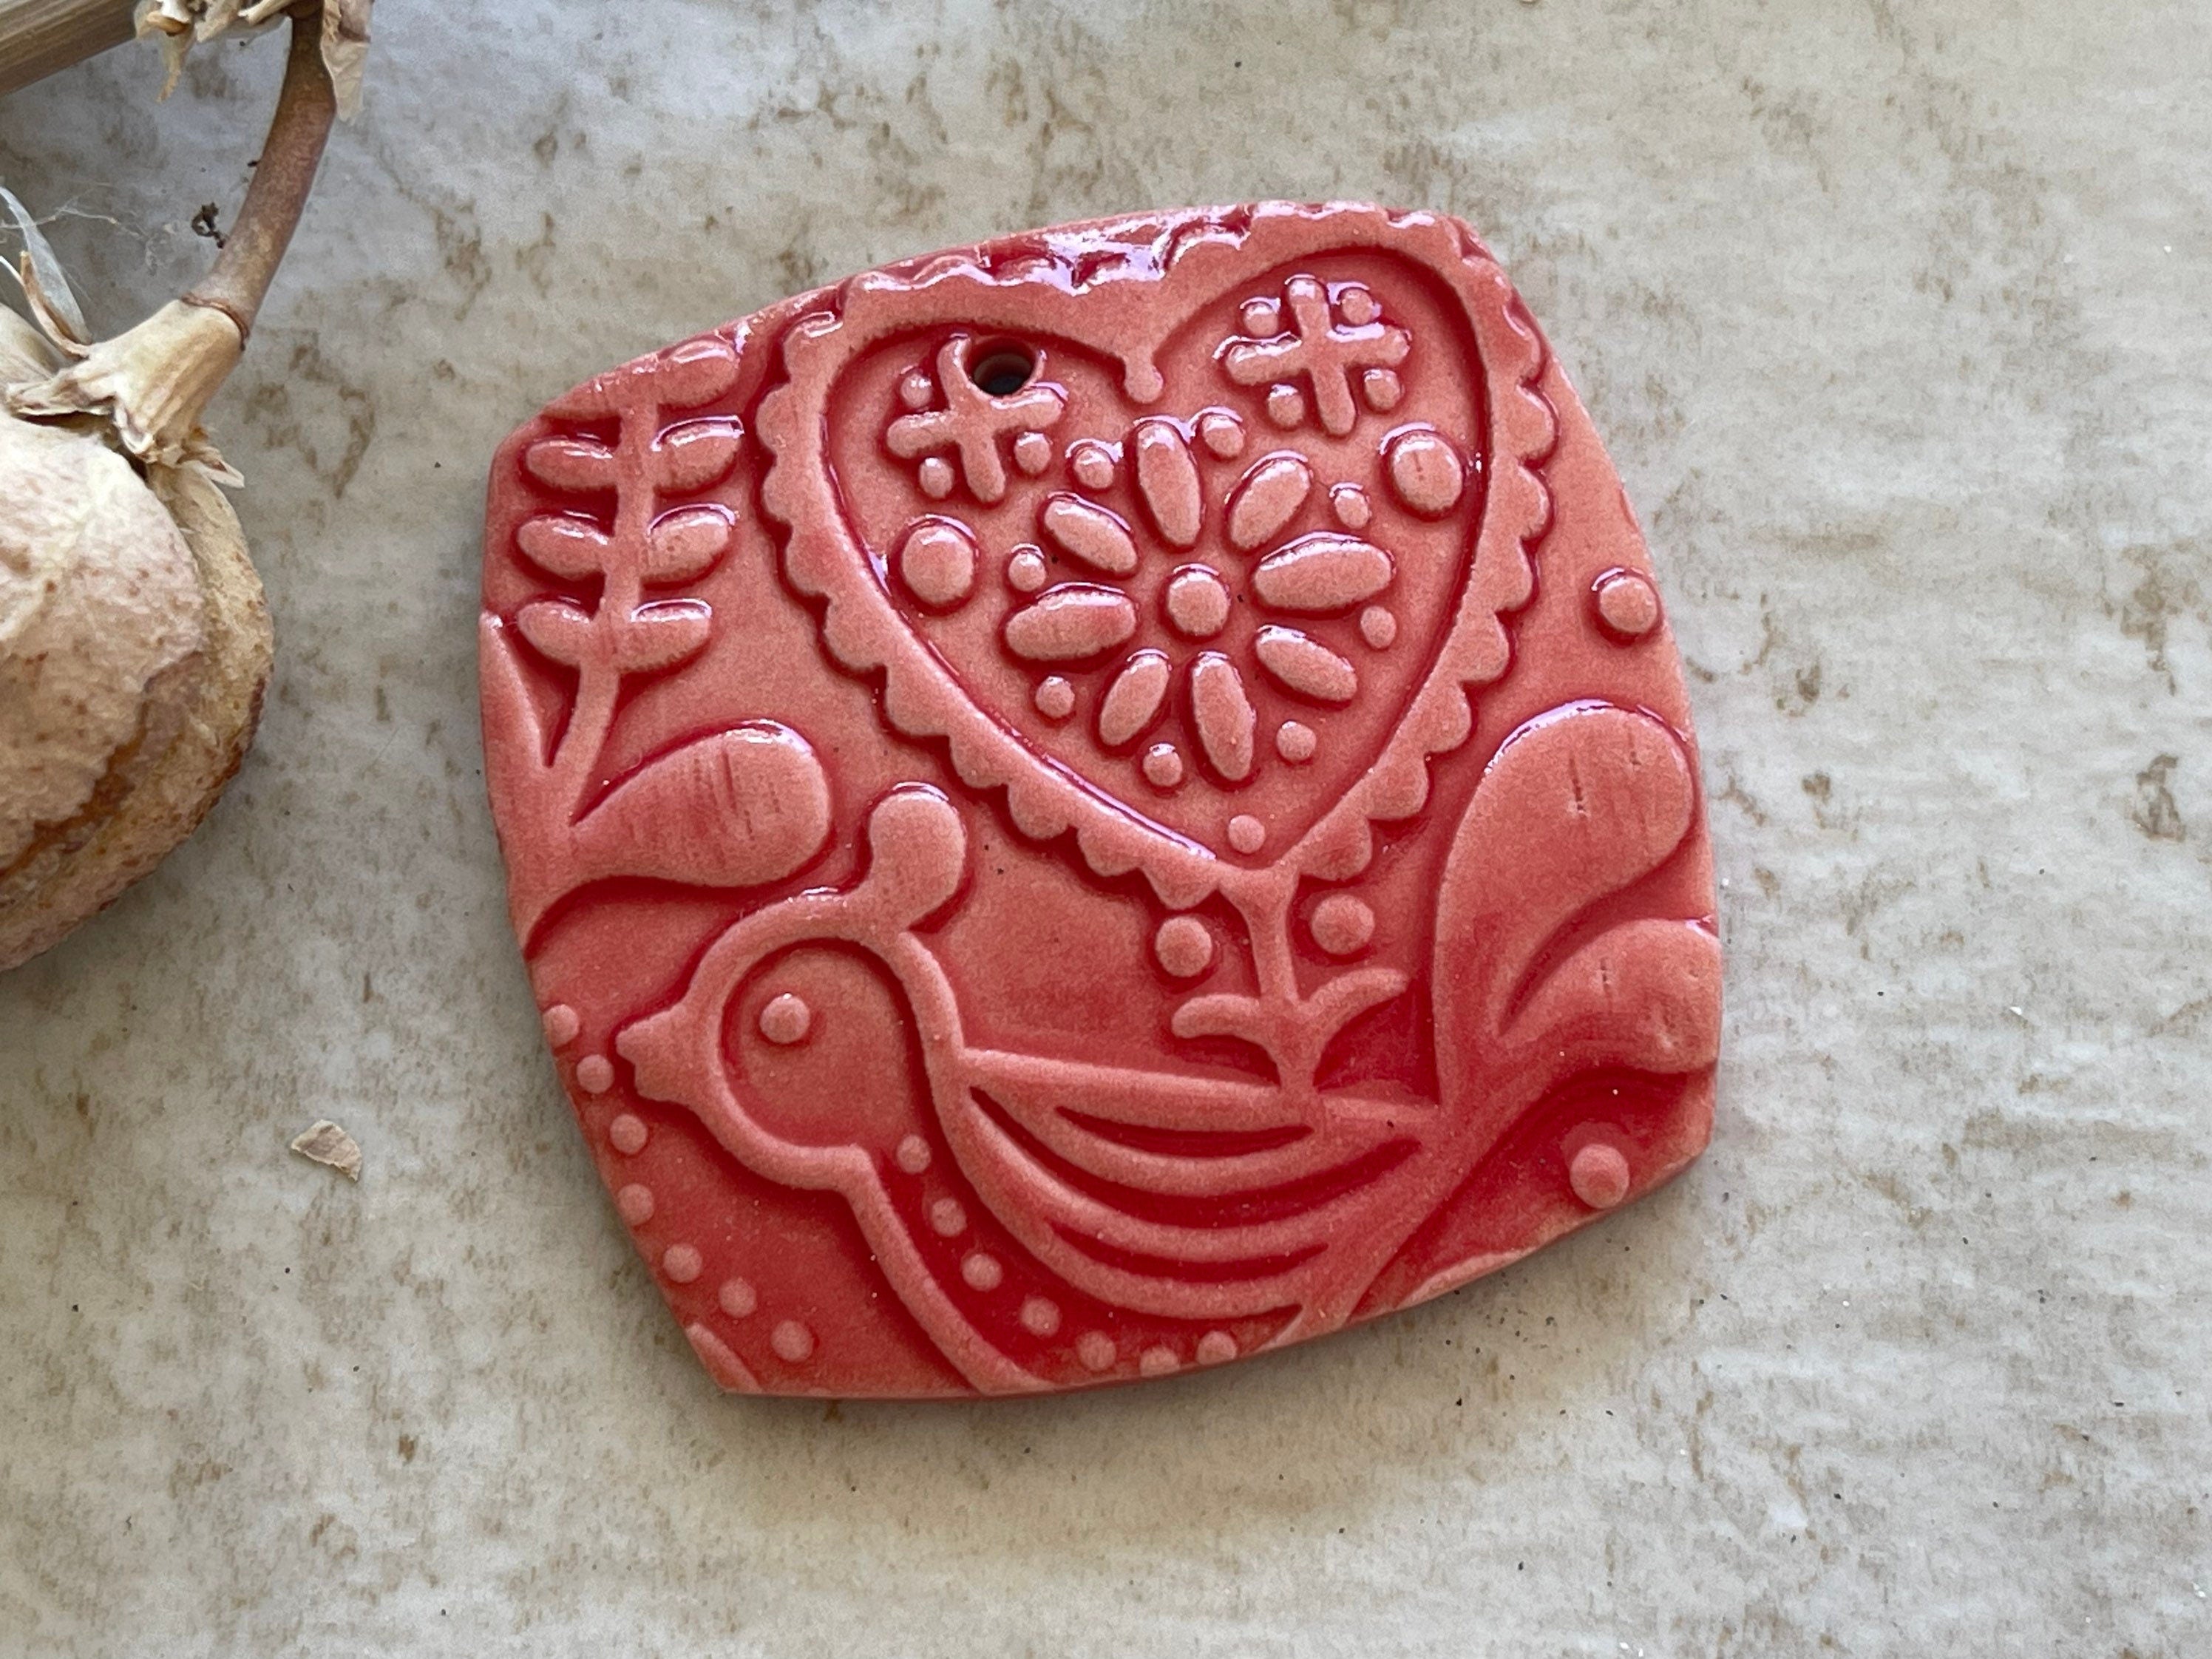 Scandinavian Bird Pendant, Red Pendant, Folk Art, Porcelain Ceramic Pendant, Jewelry Making Components